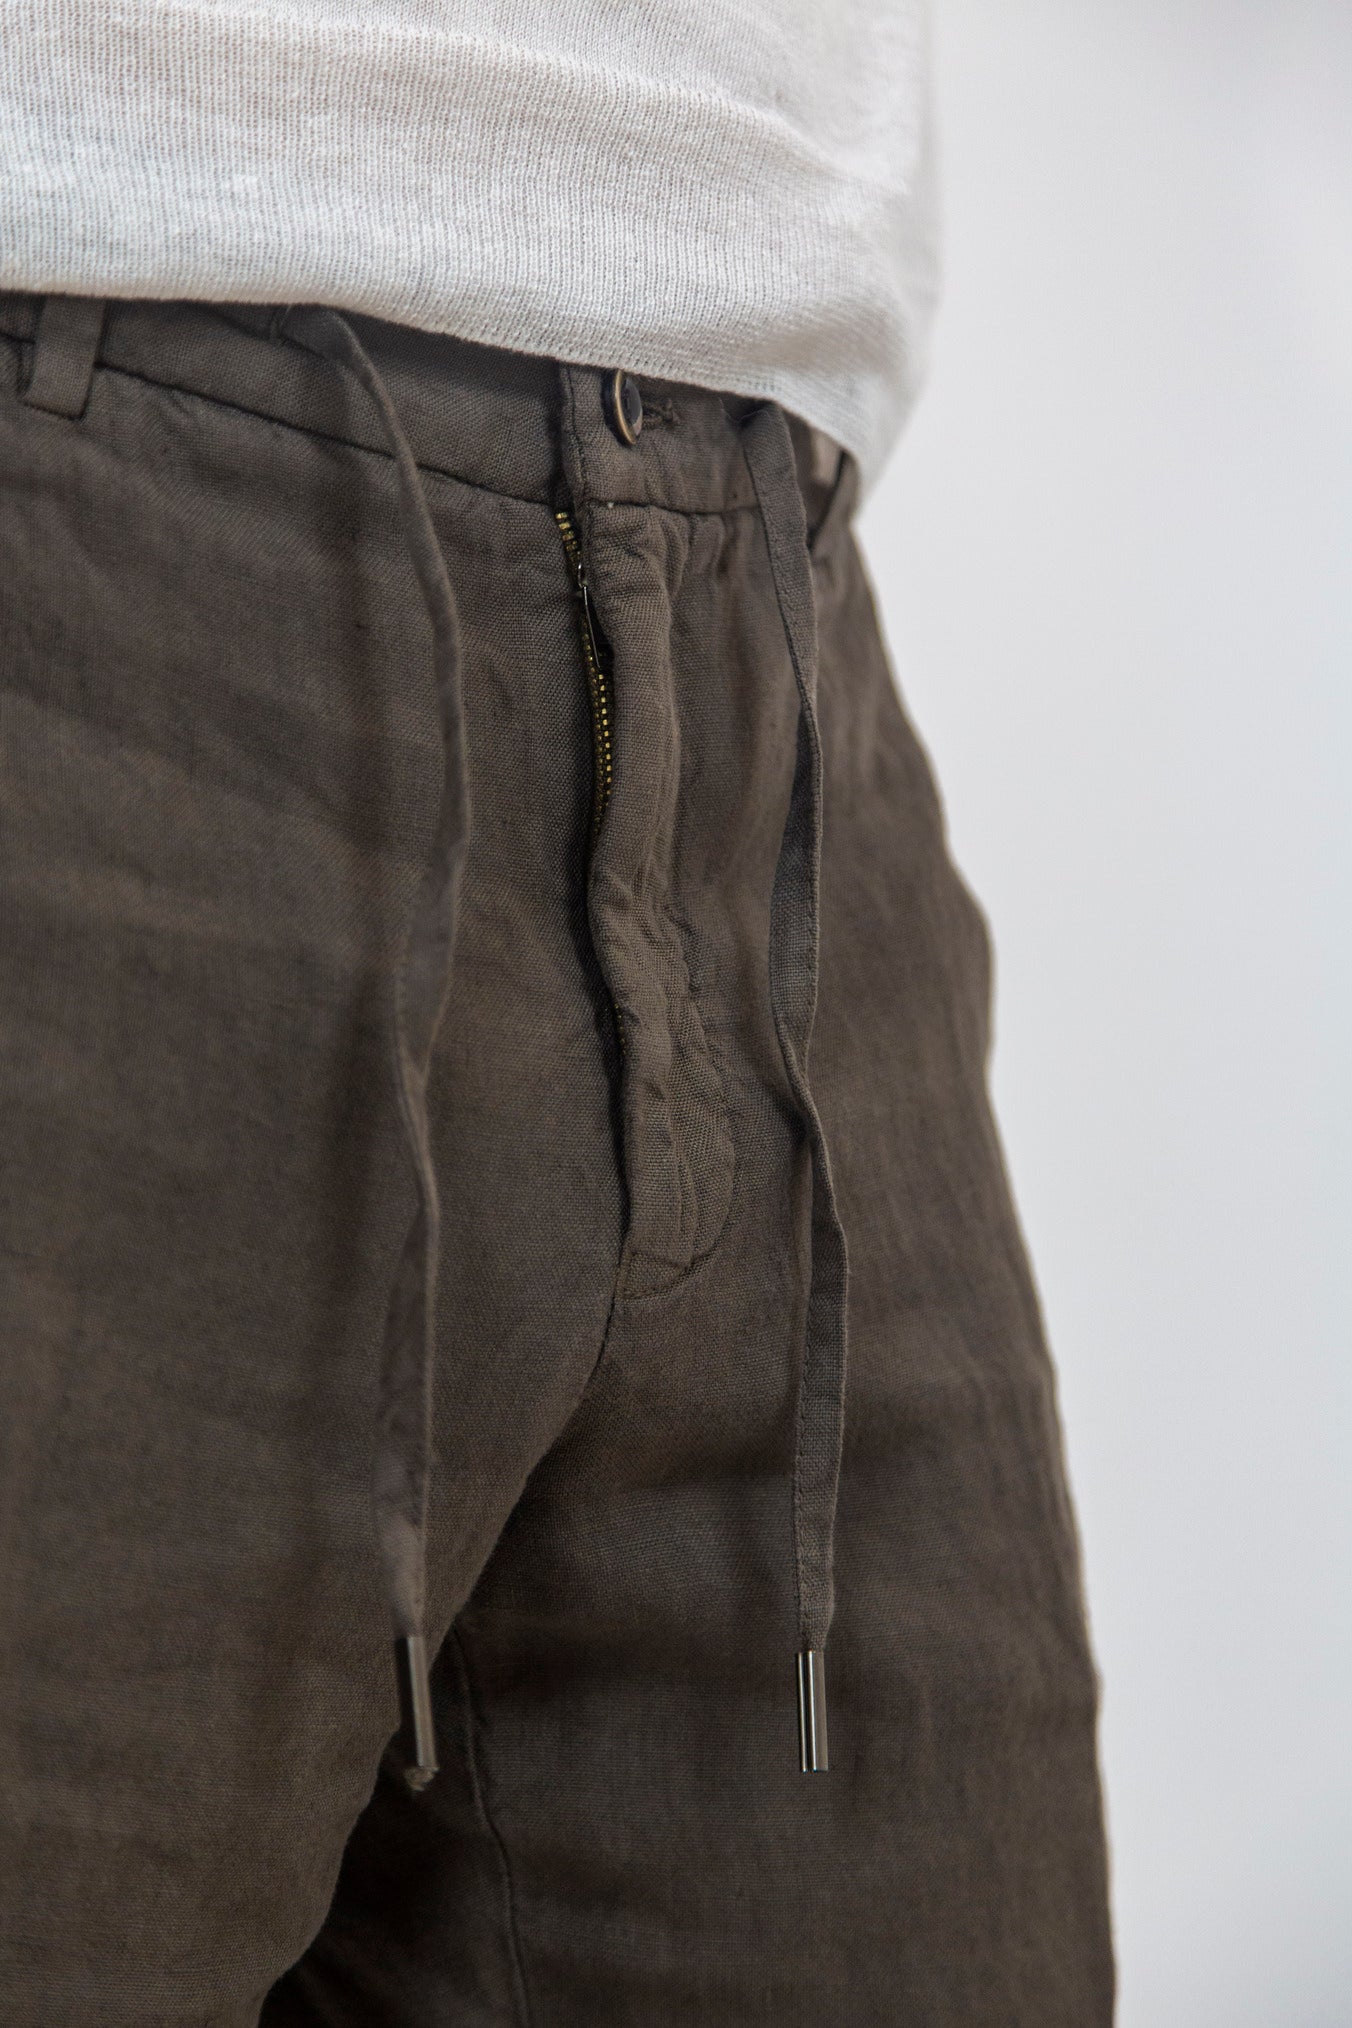 GUARINO Bermuda Shorts with Drawstring in Dark Brown Linen